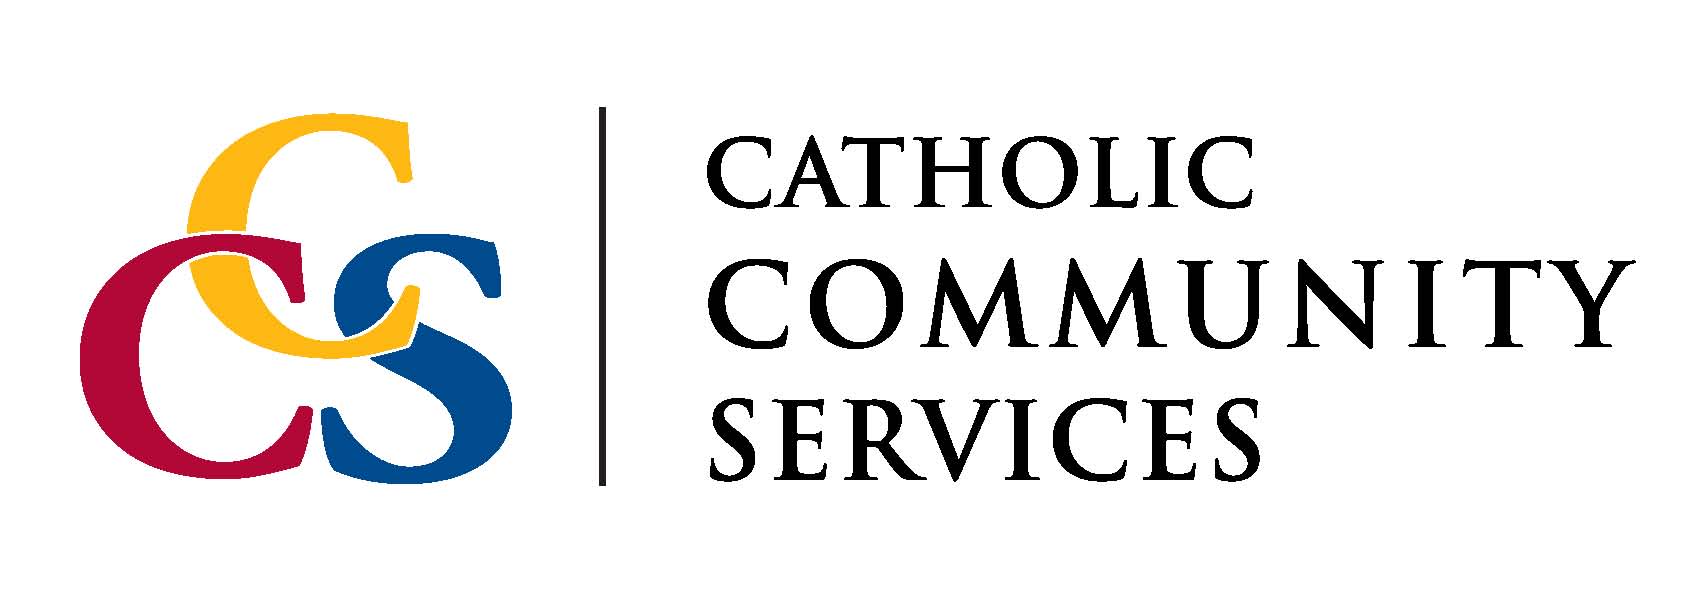 Catholic Comunity Services